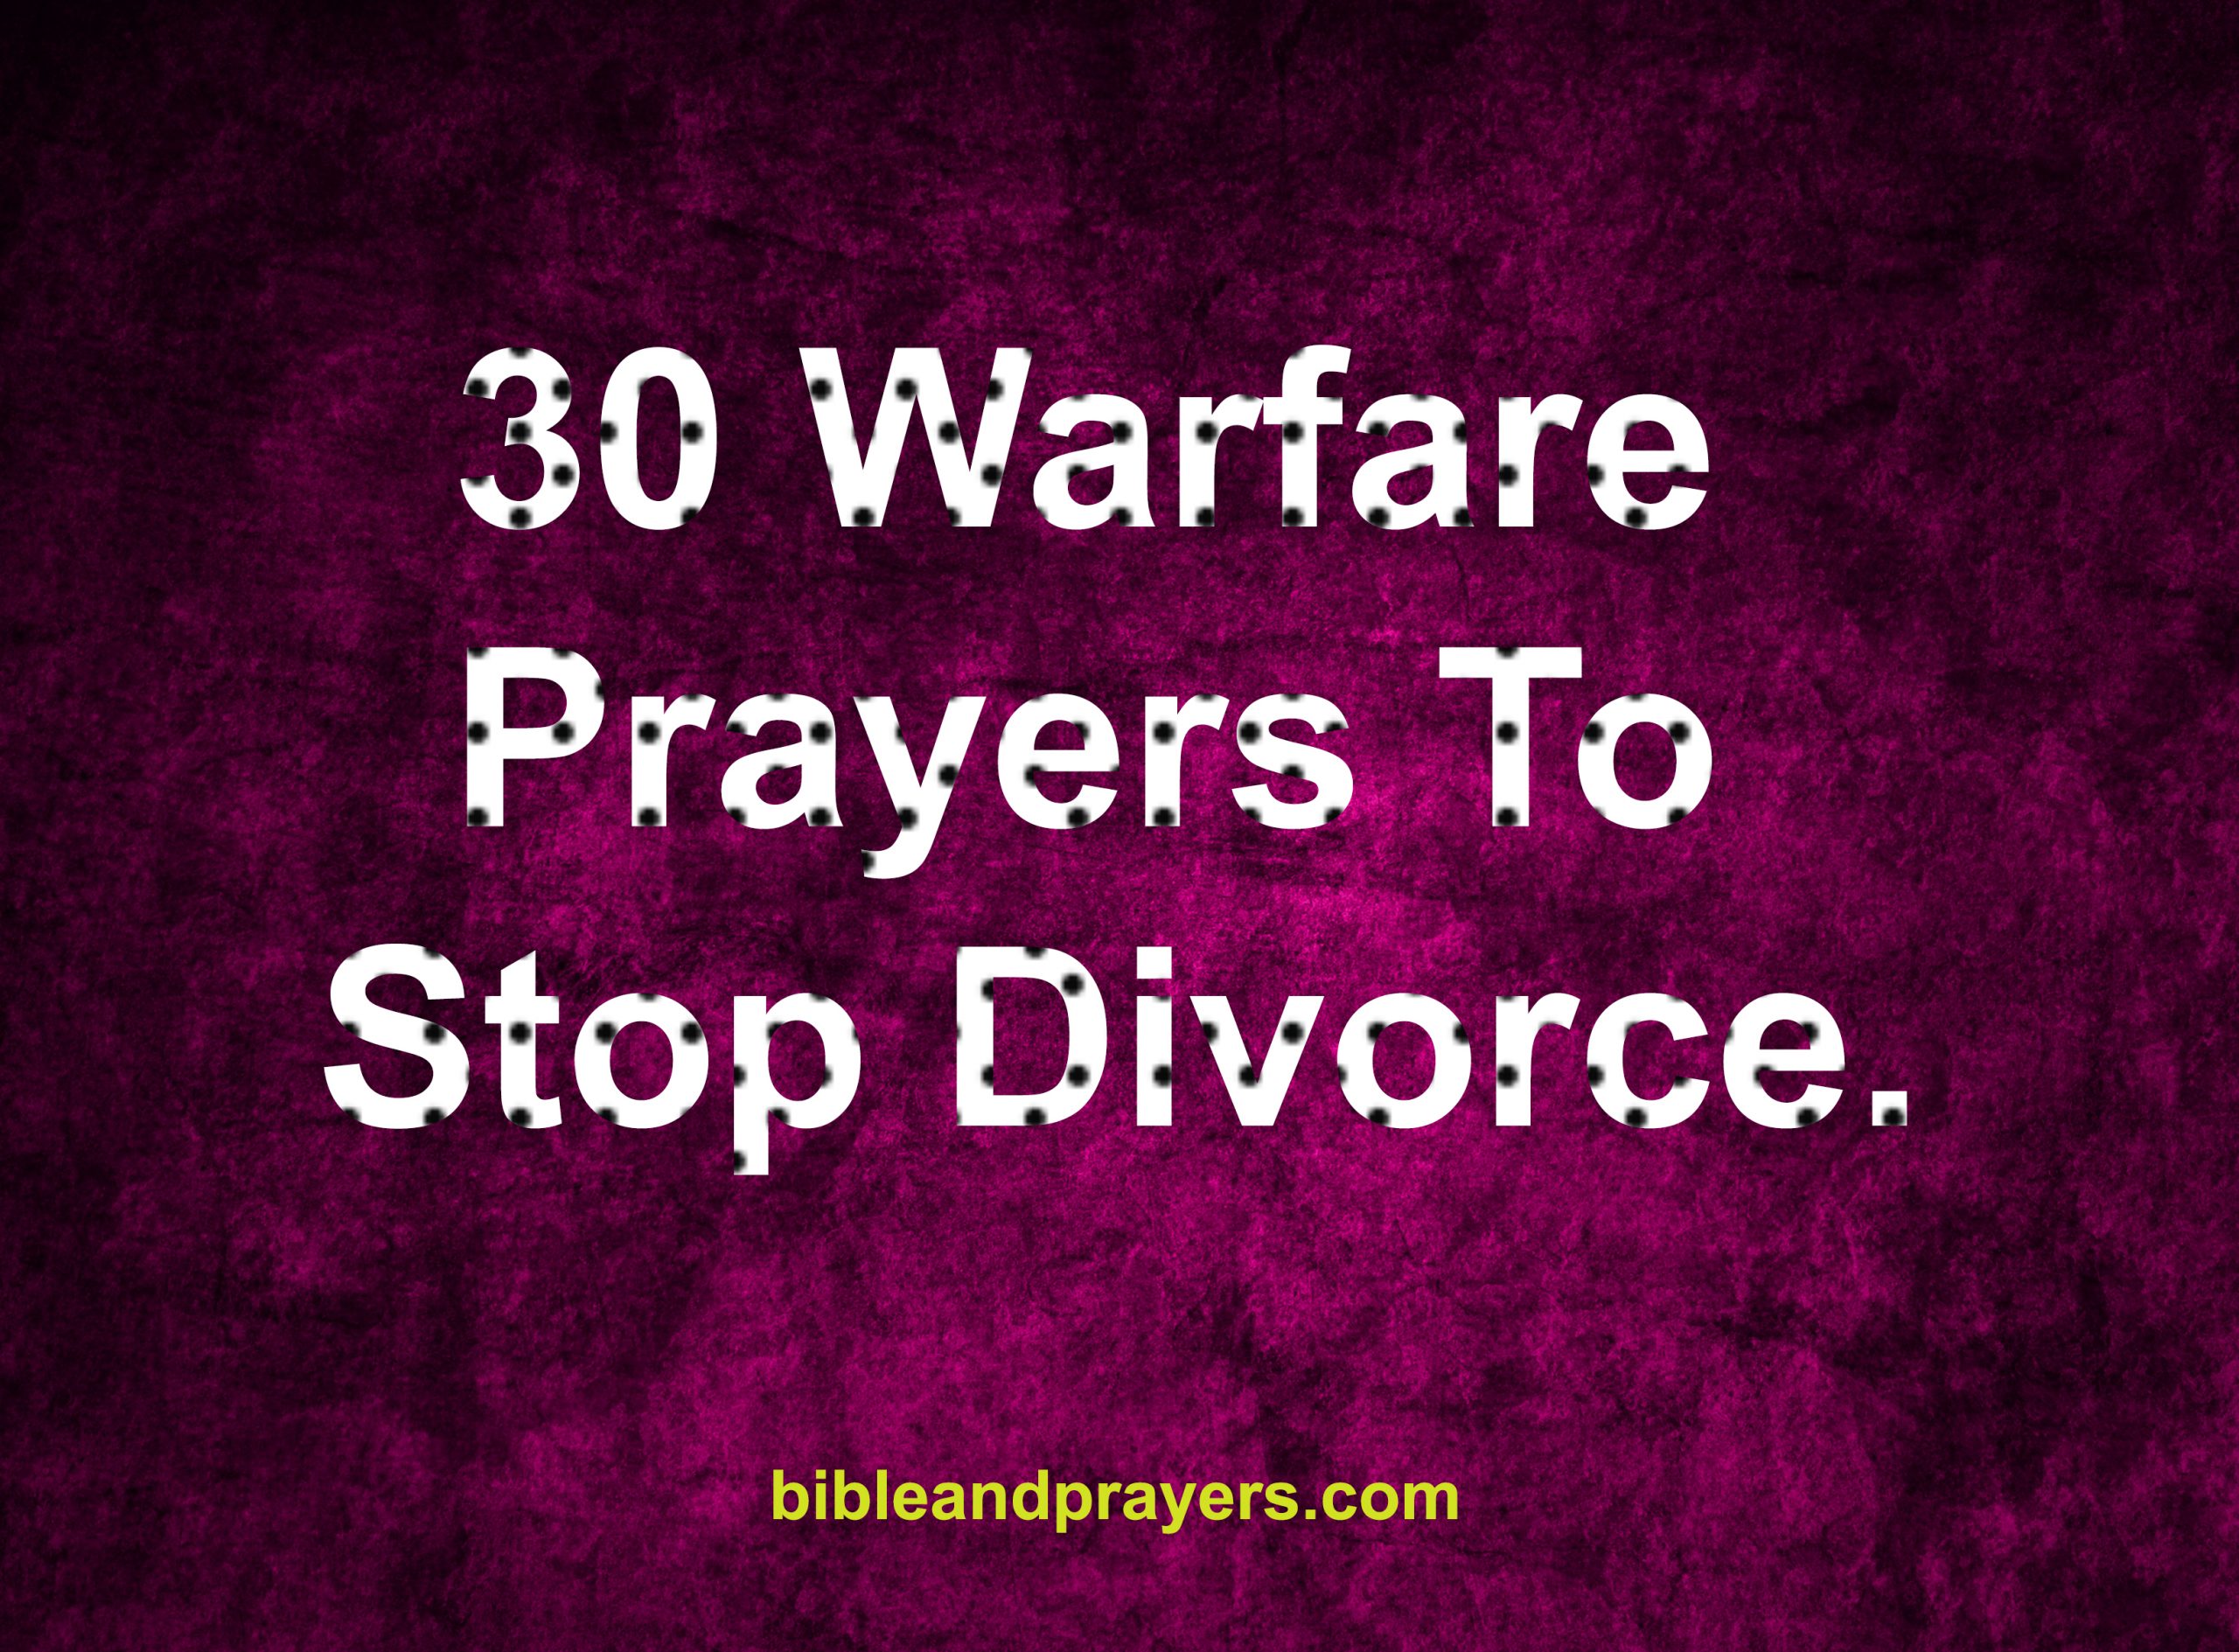 Warfare Prayer To Stop Divorce.